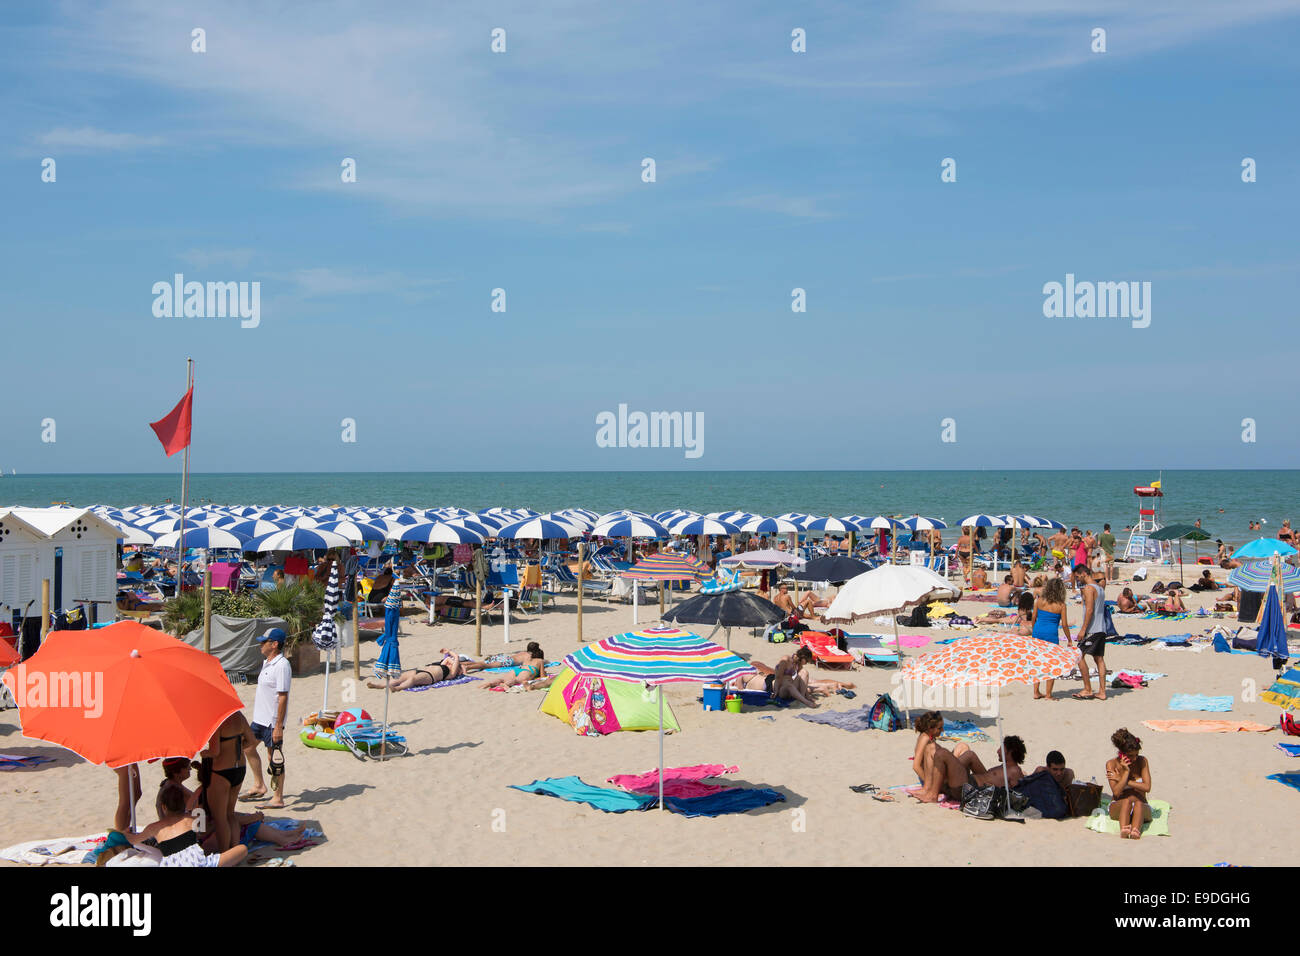 Playa, Gente, sombrilla, Adreatic Mar, Senigallia, Ancona, Marken, Italia, Foto de stock